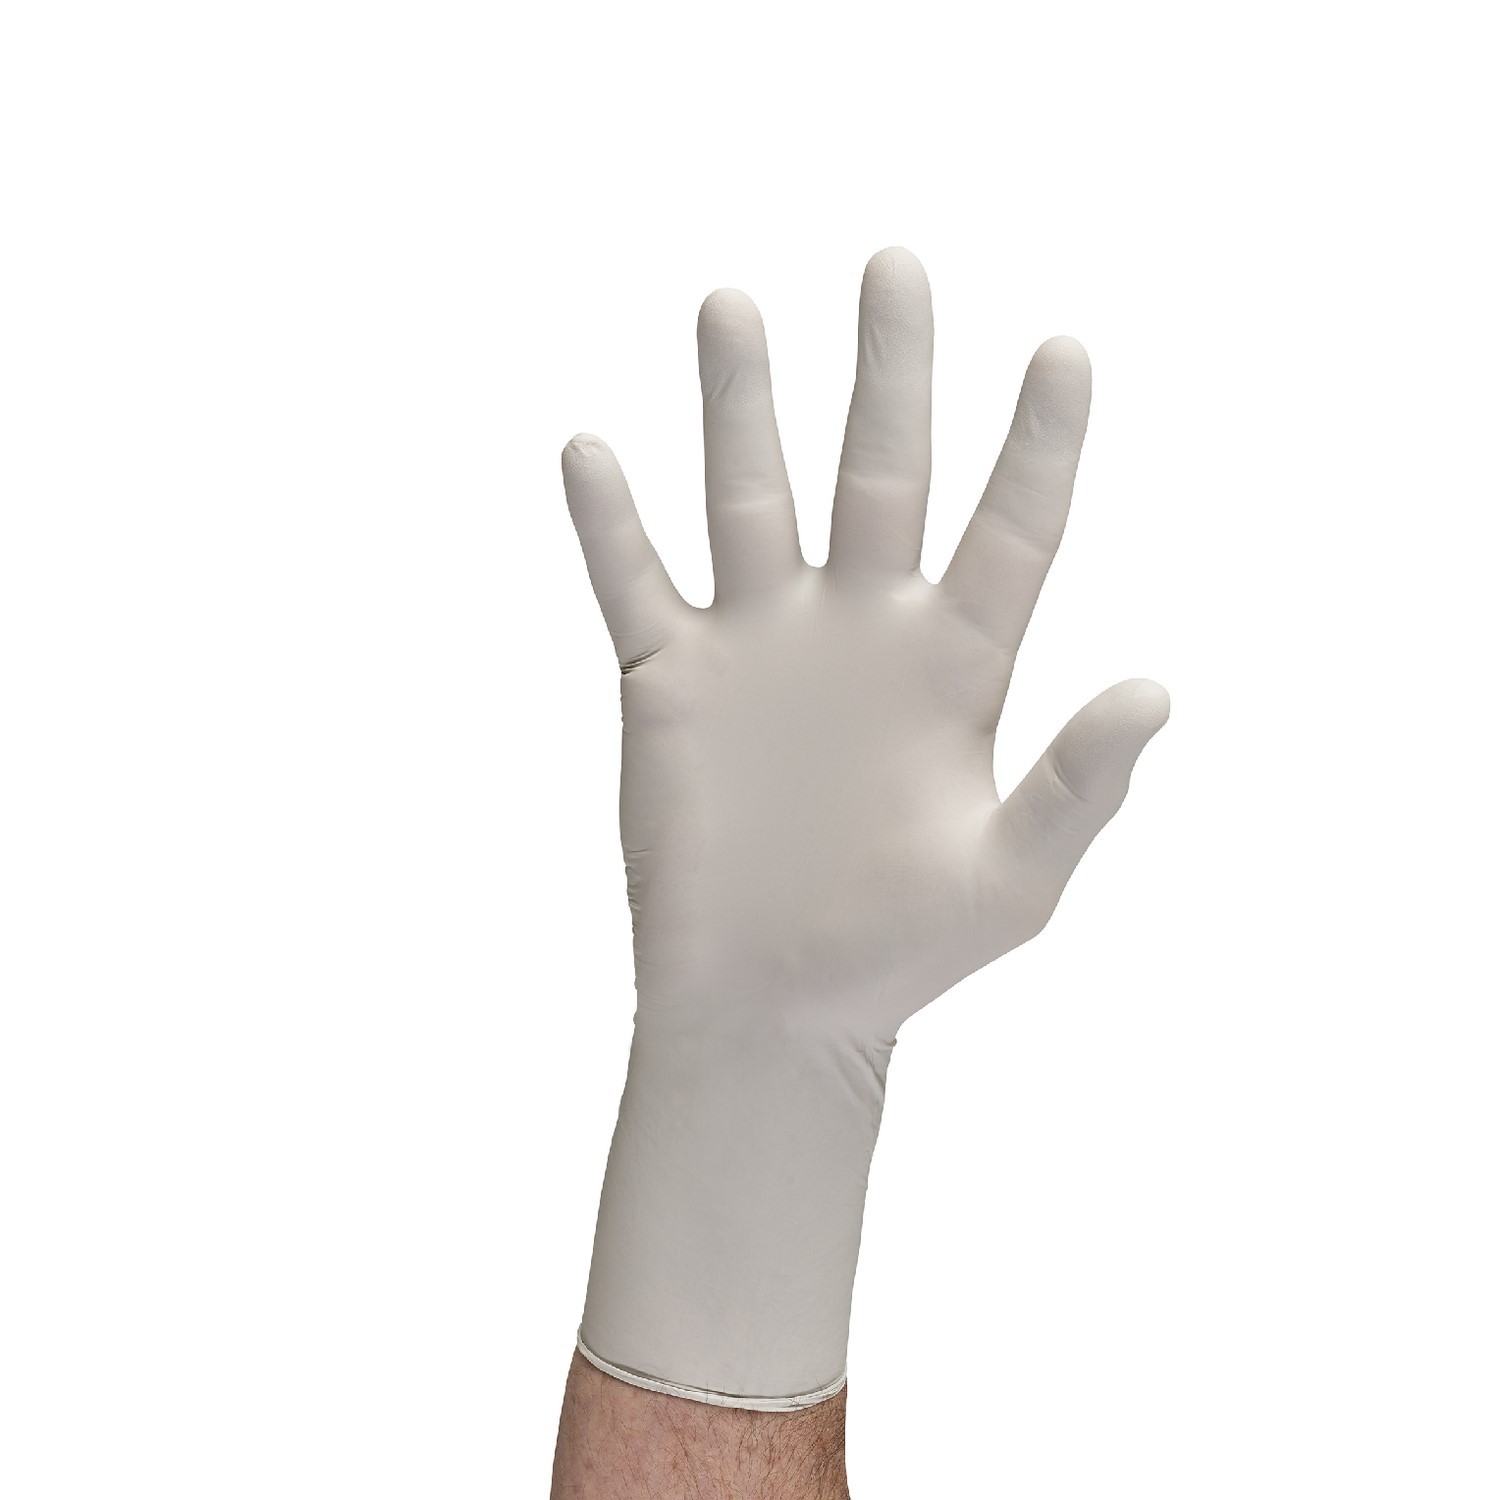 STERLING-XTRA* Exam Glove